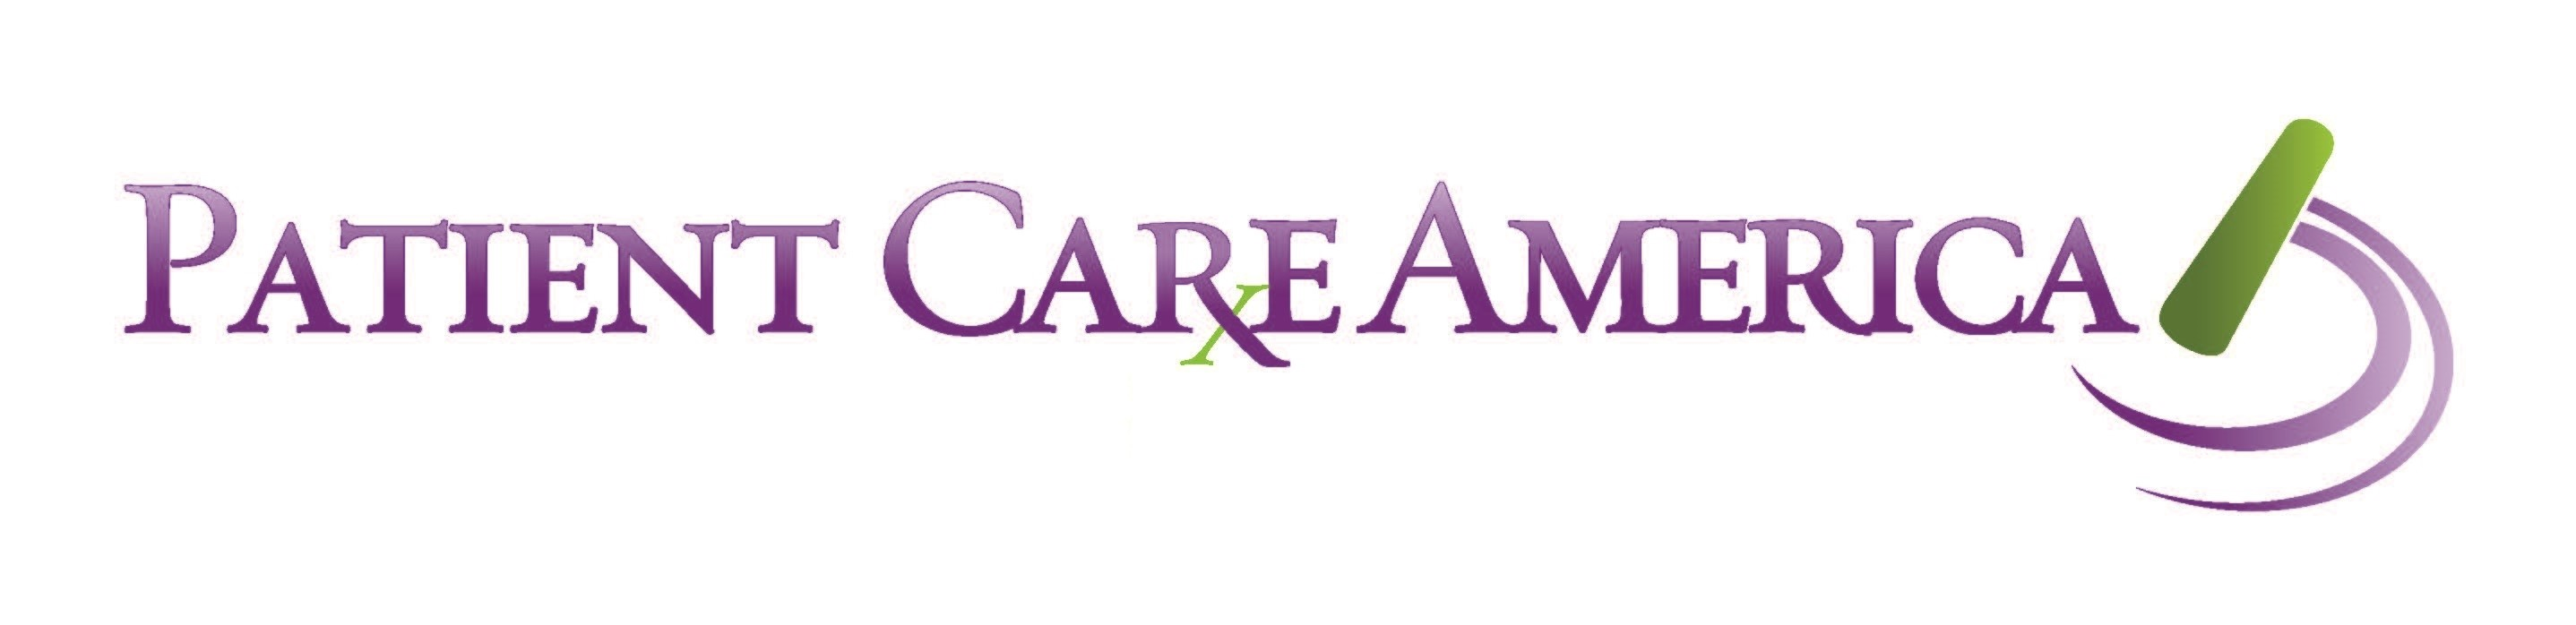 Patient Care America Company Logo